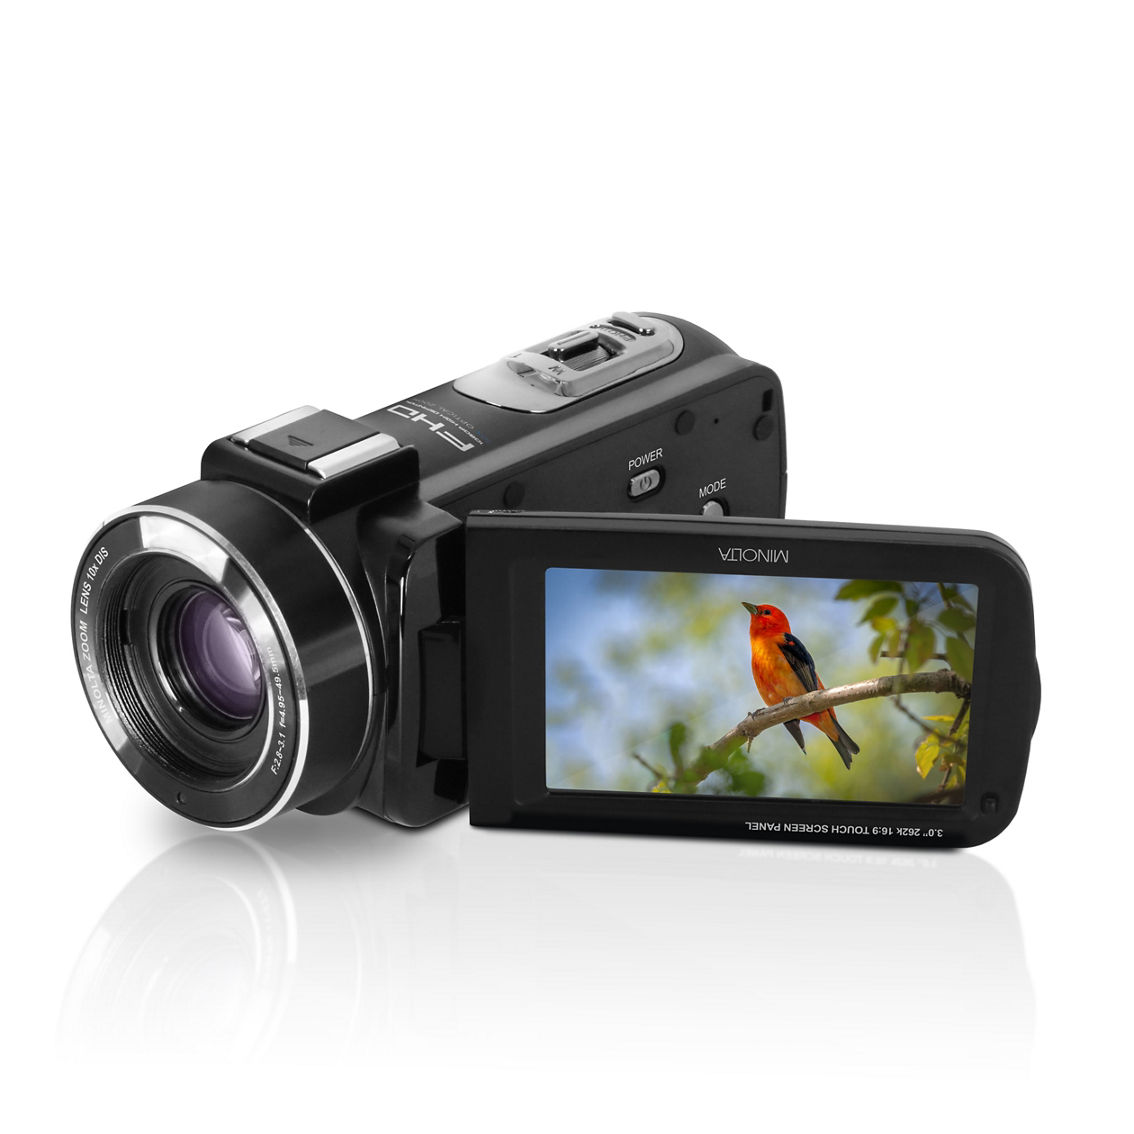 Minolta MN100HDZ 1080P Full HD / 24MP Camcorder with 10X Optical Zoom - Image 2 of 5